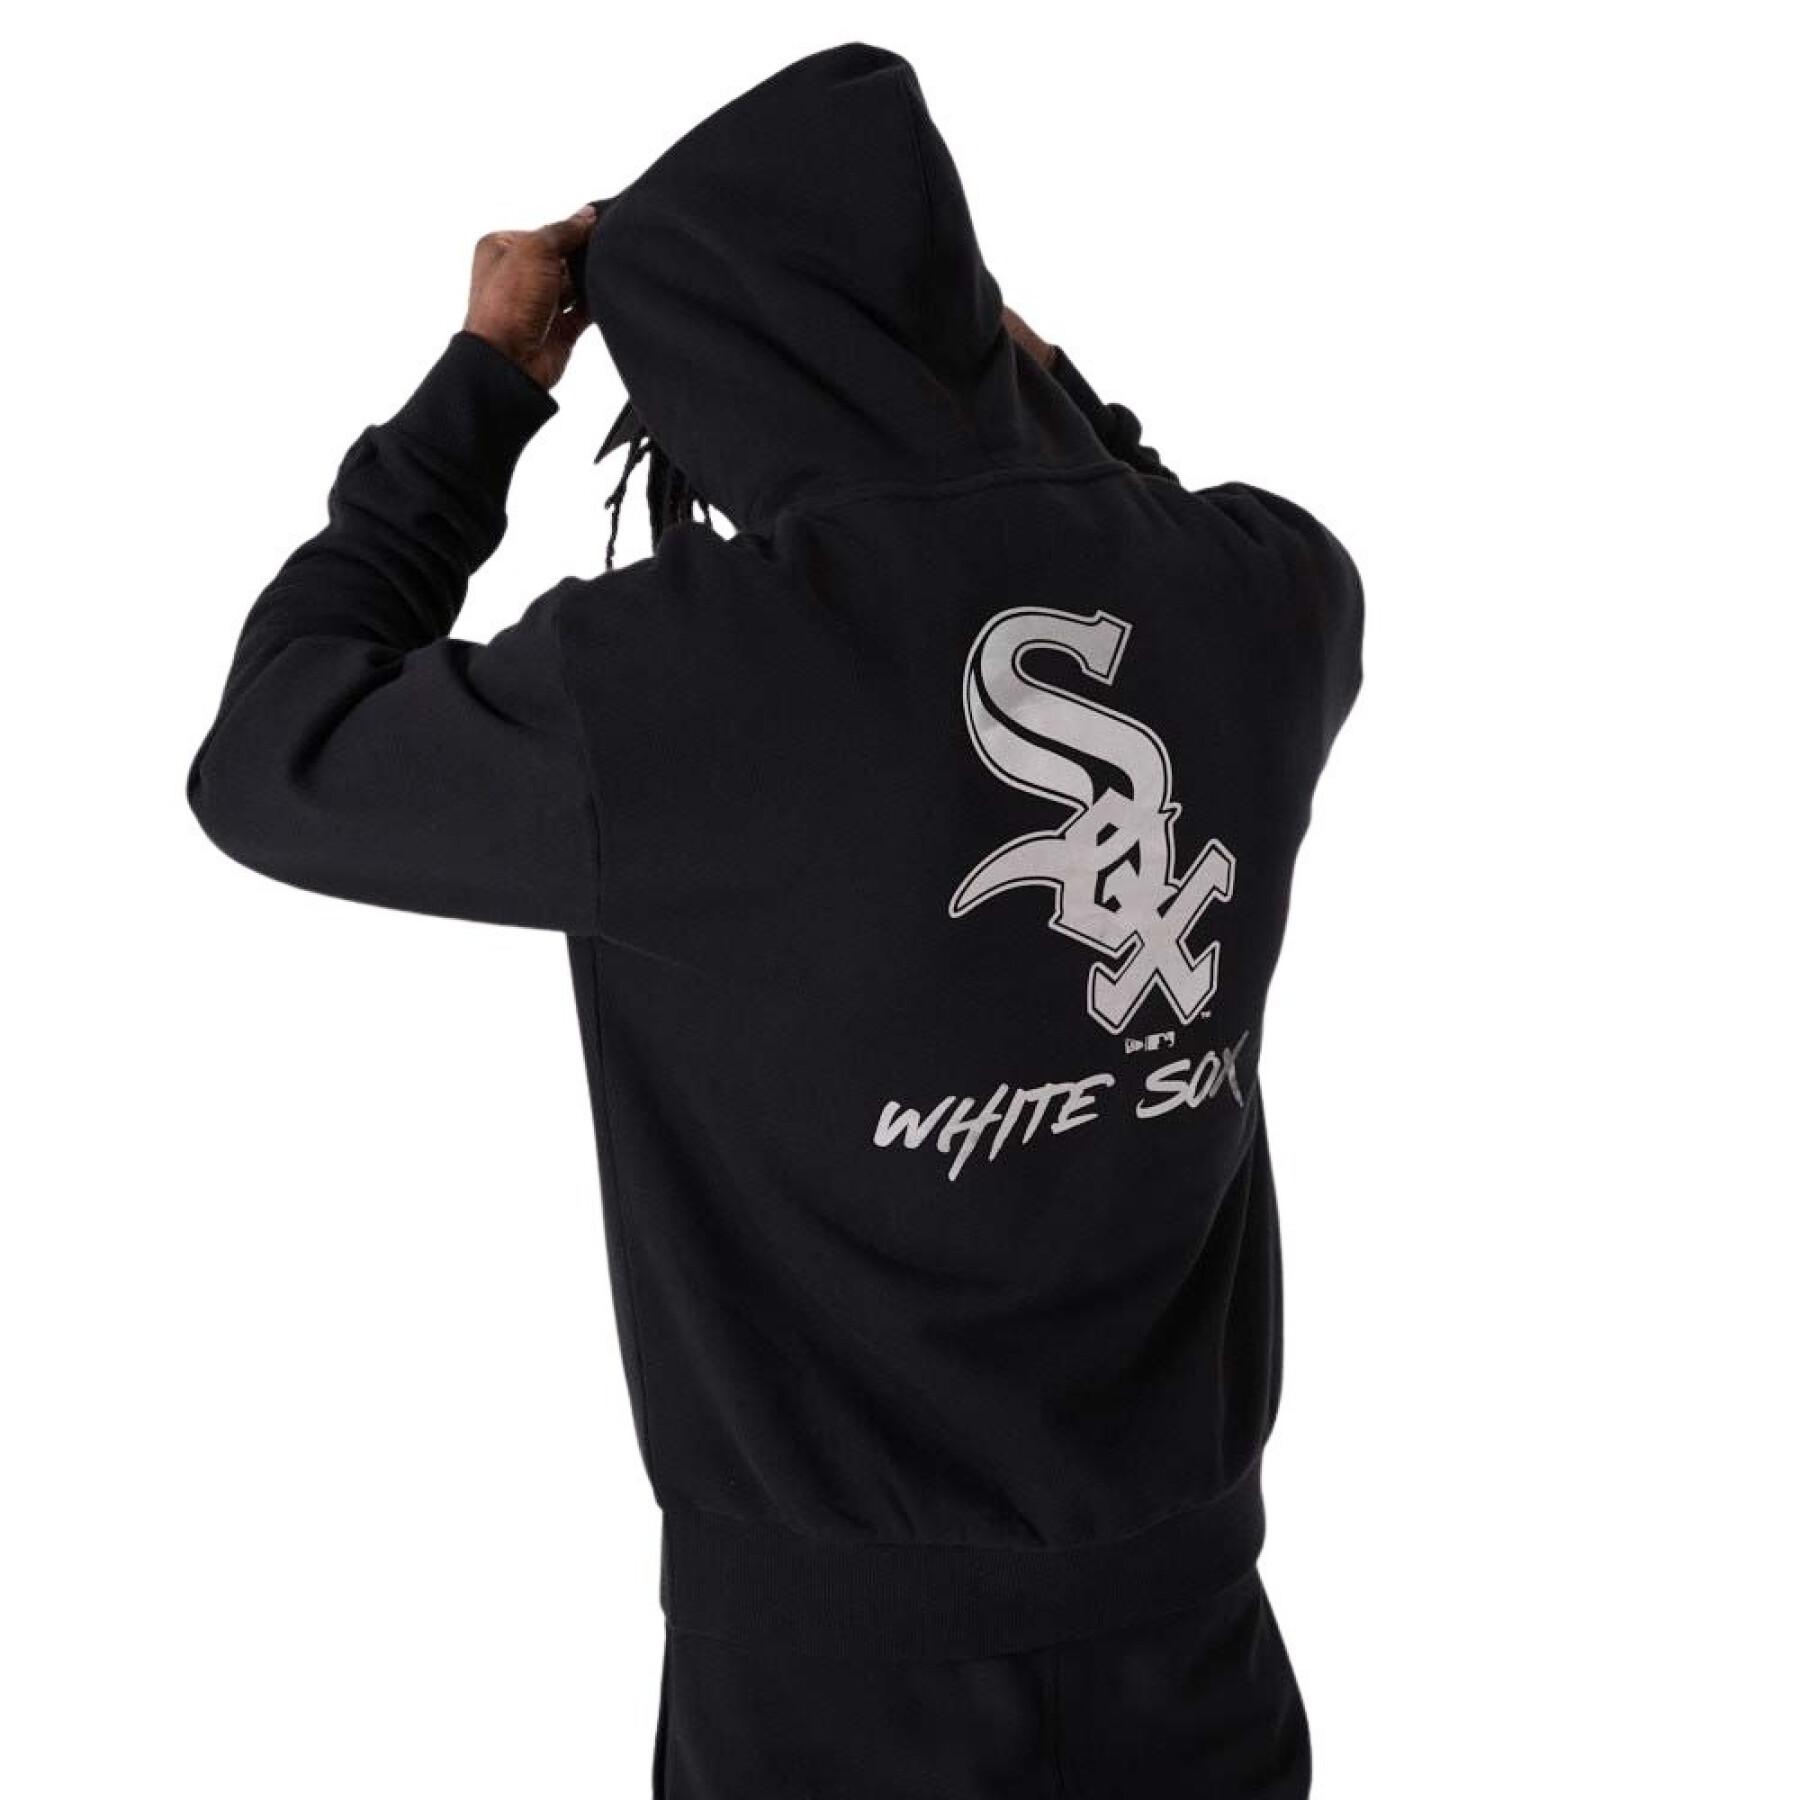 Hooded sweatshirt Chicago White Sox BP Metallic PO